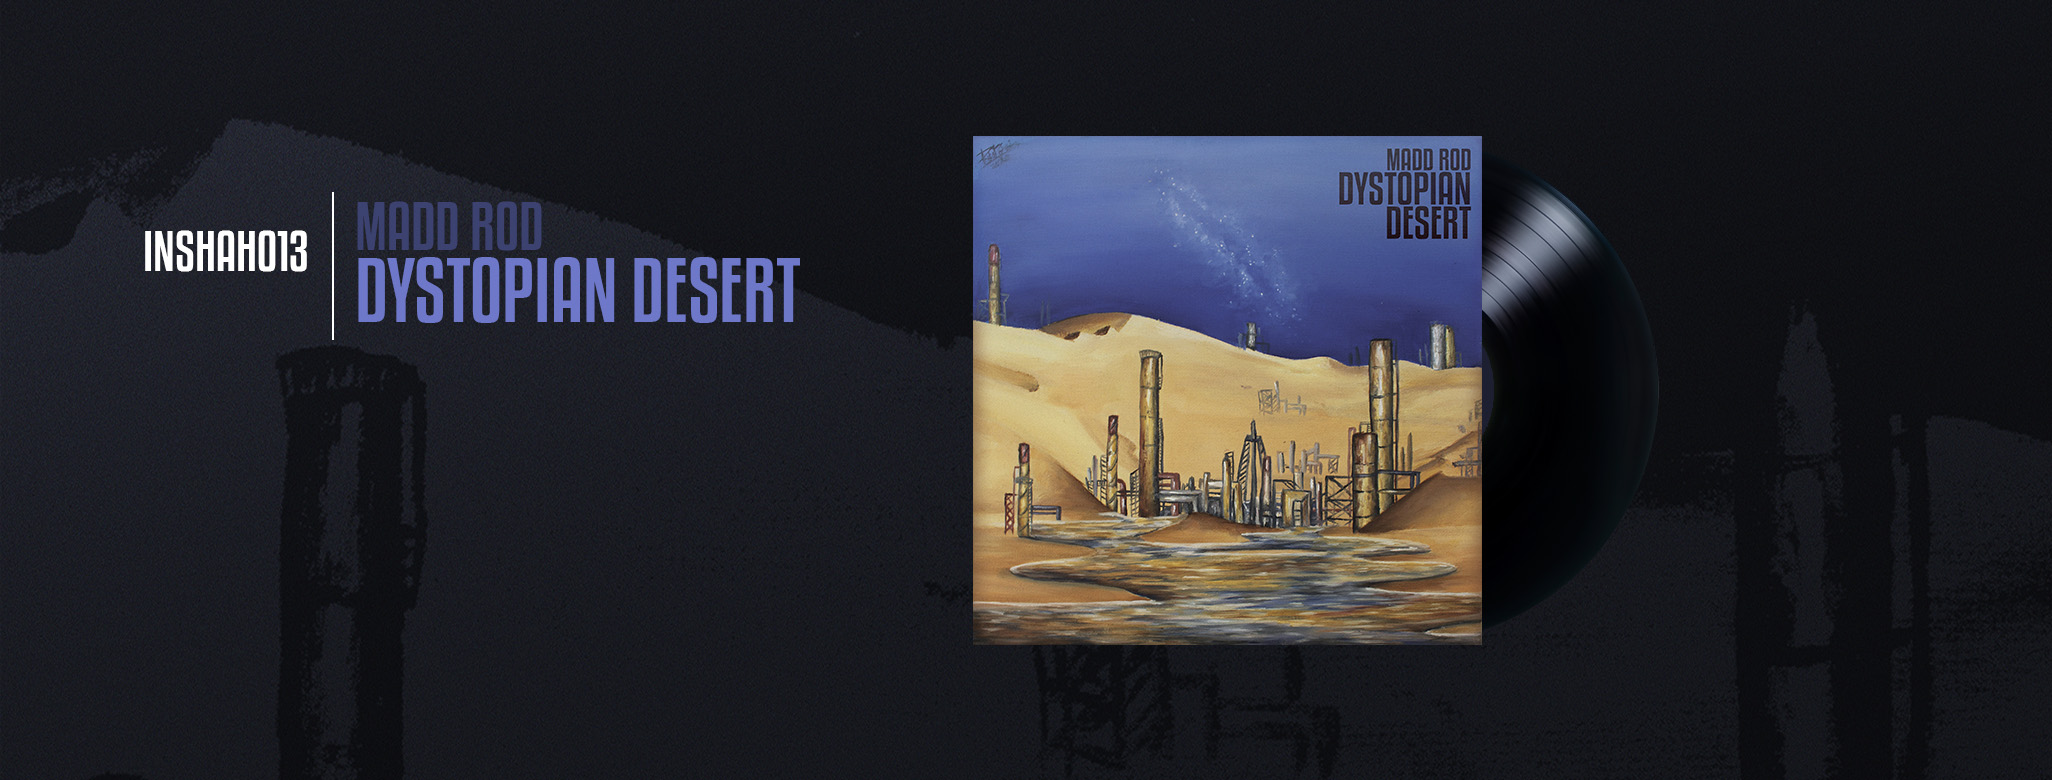 INSHAH013: Madd Rod – Dystopian Desert [Album]